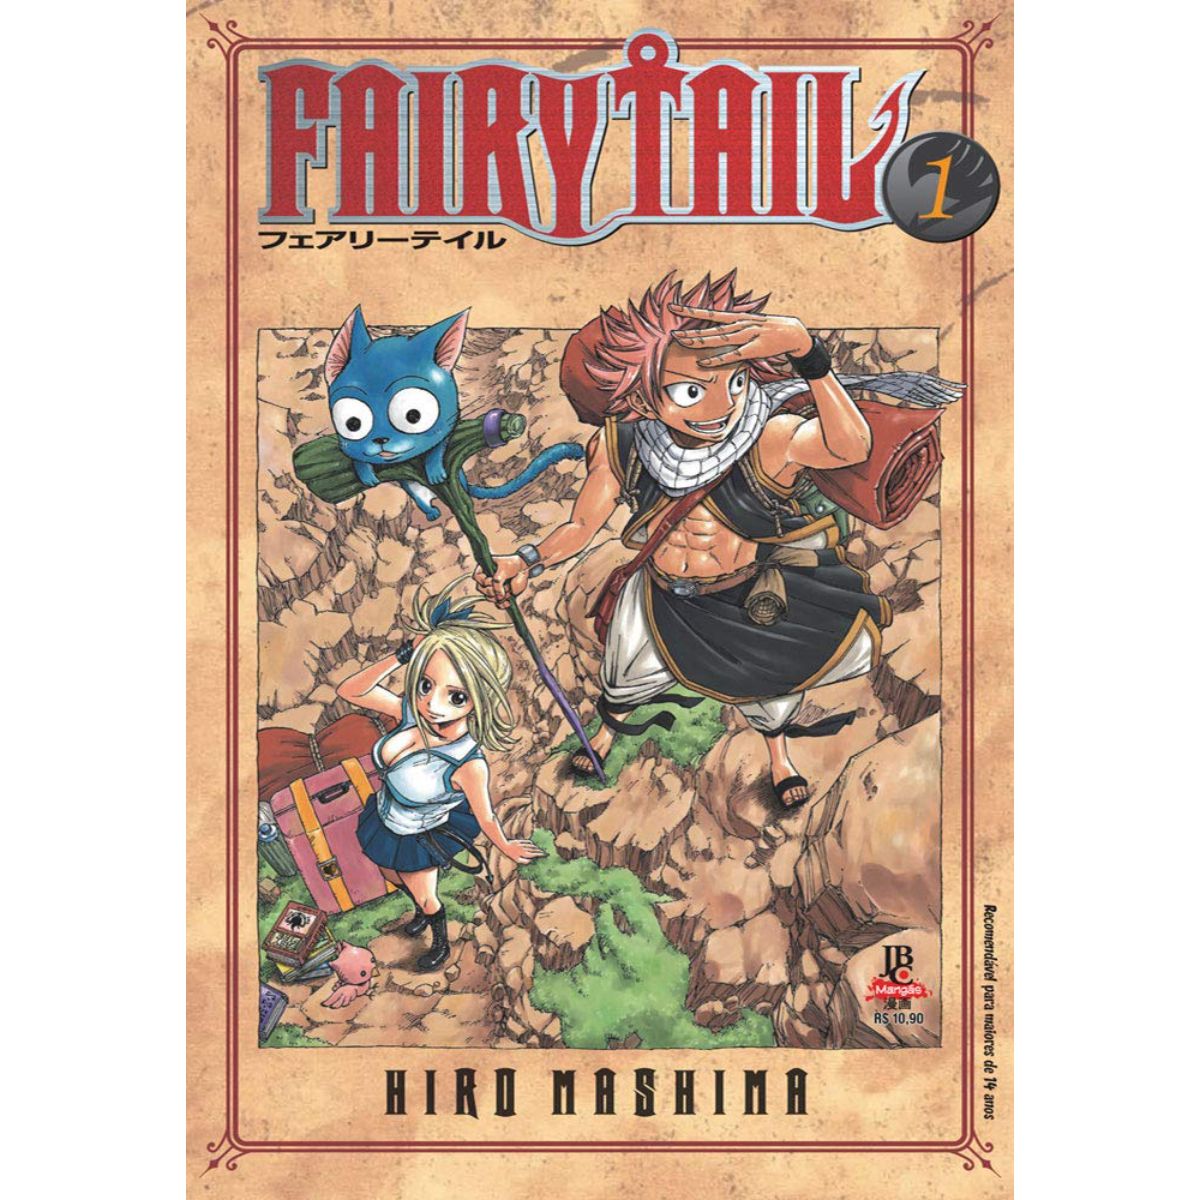 Fairy Tail, A Guilda de Magos!